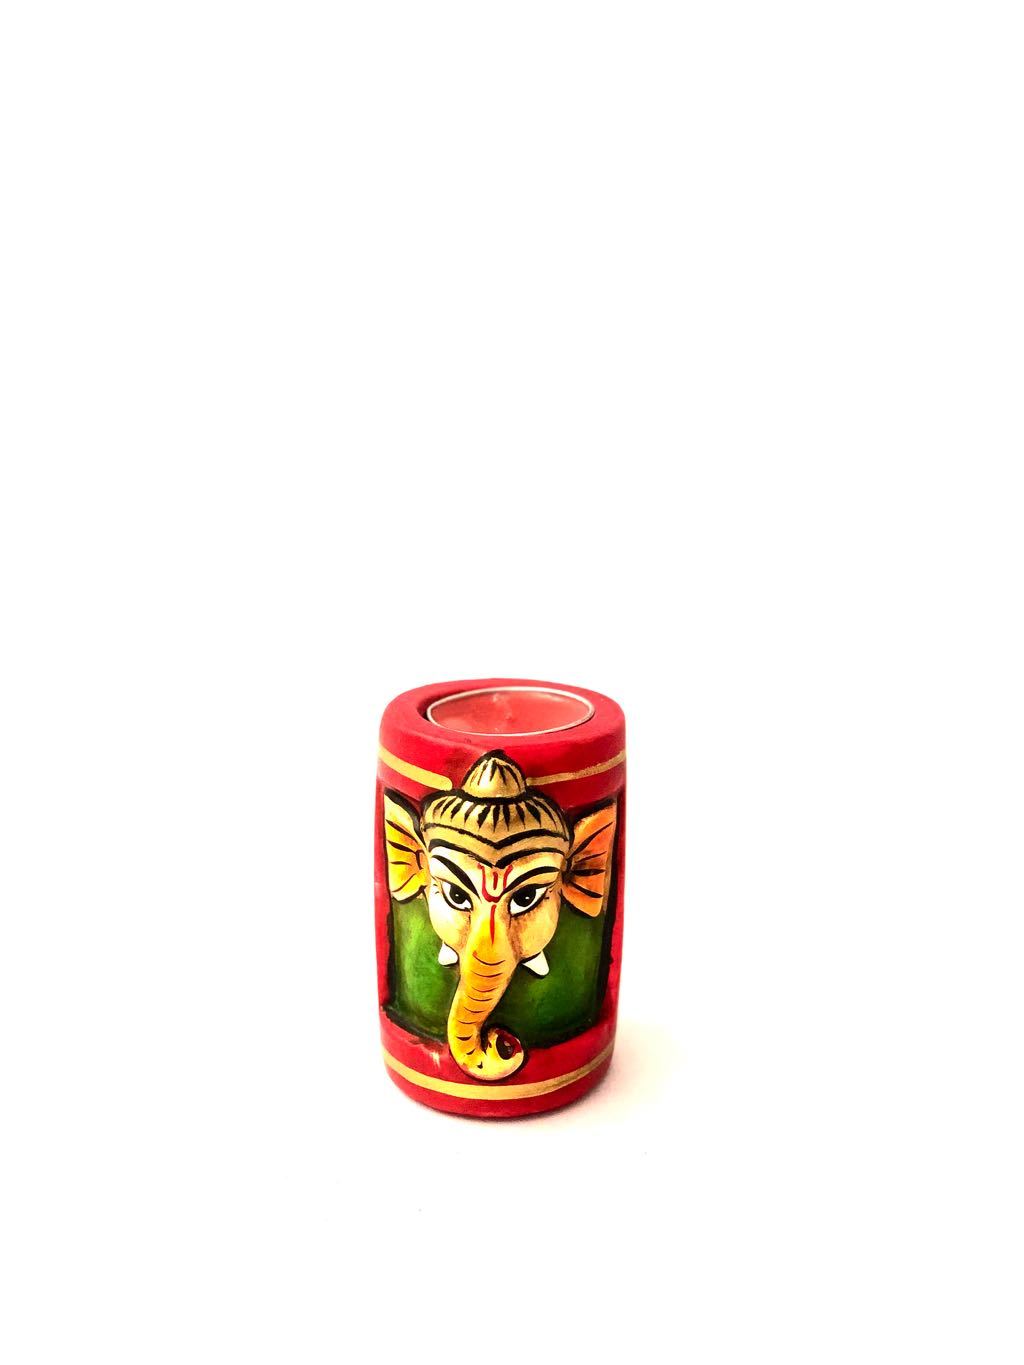 Ganesha HandPainted Resin Tea Light Holder Spiritual Lights Tamrapatra